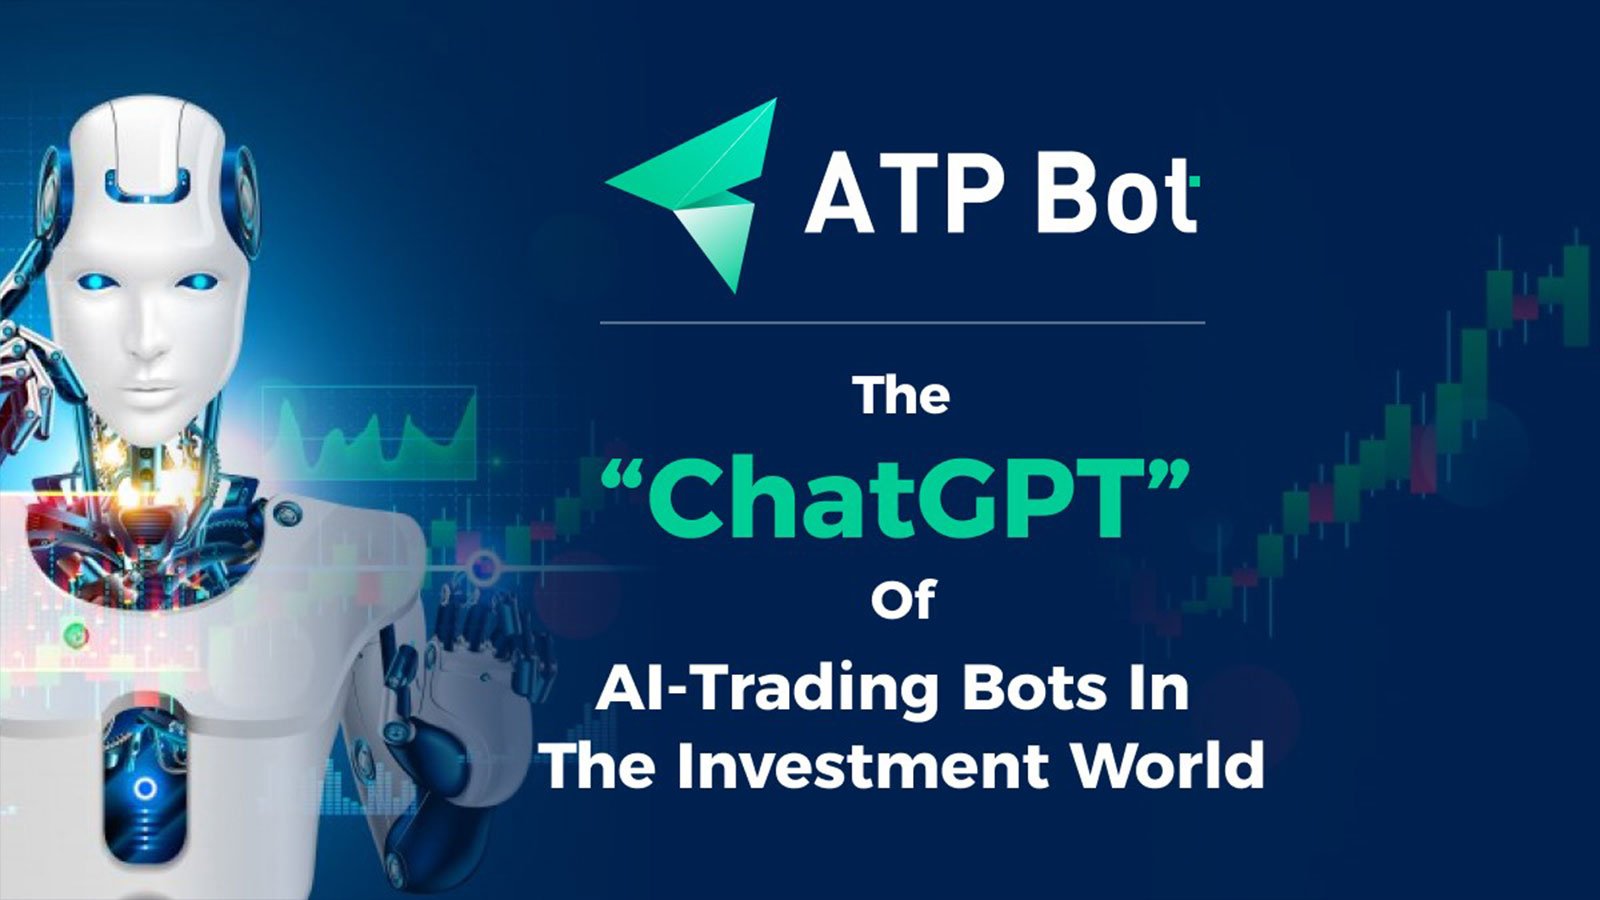 ATPBot Launches Powerful AI-Quantitative Trading Bot